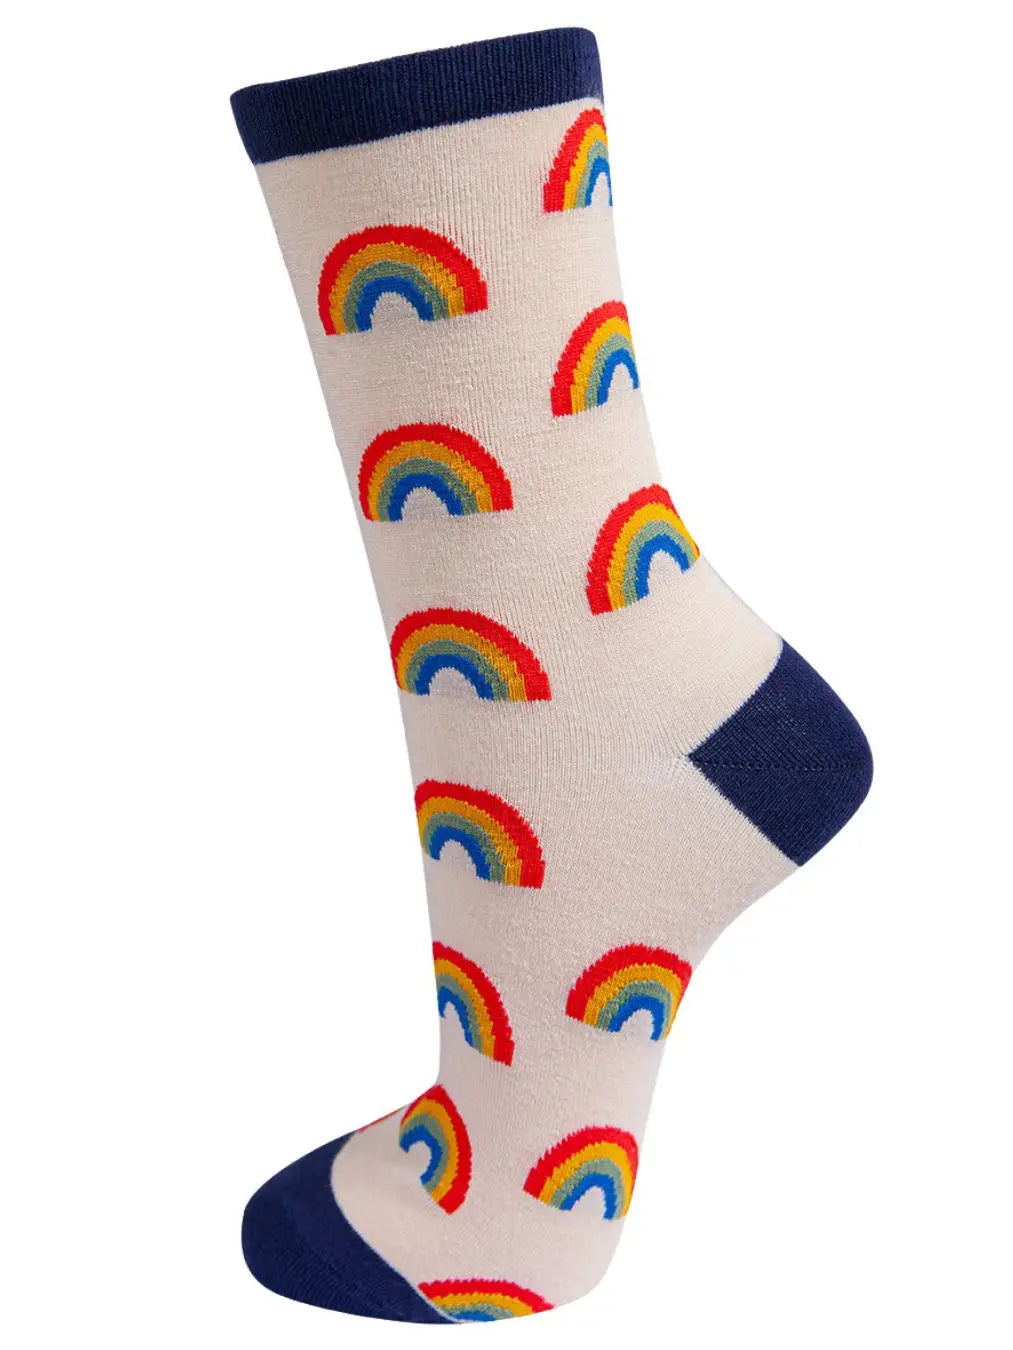 Rainbow Womens Crew Socks - P I C N I C 